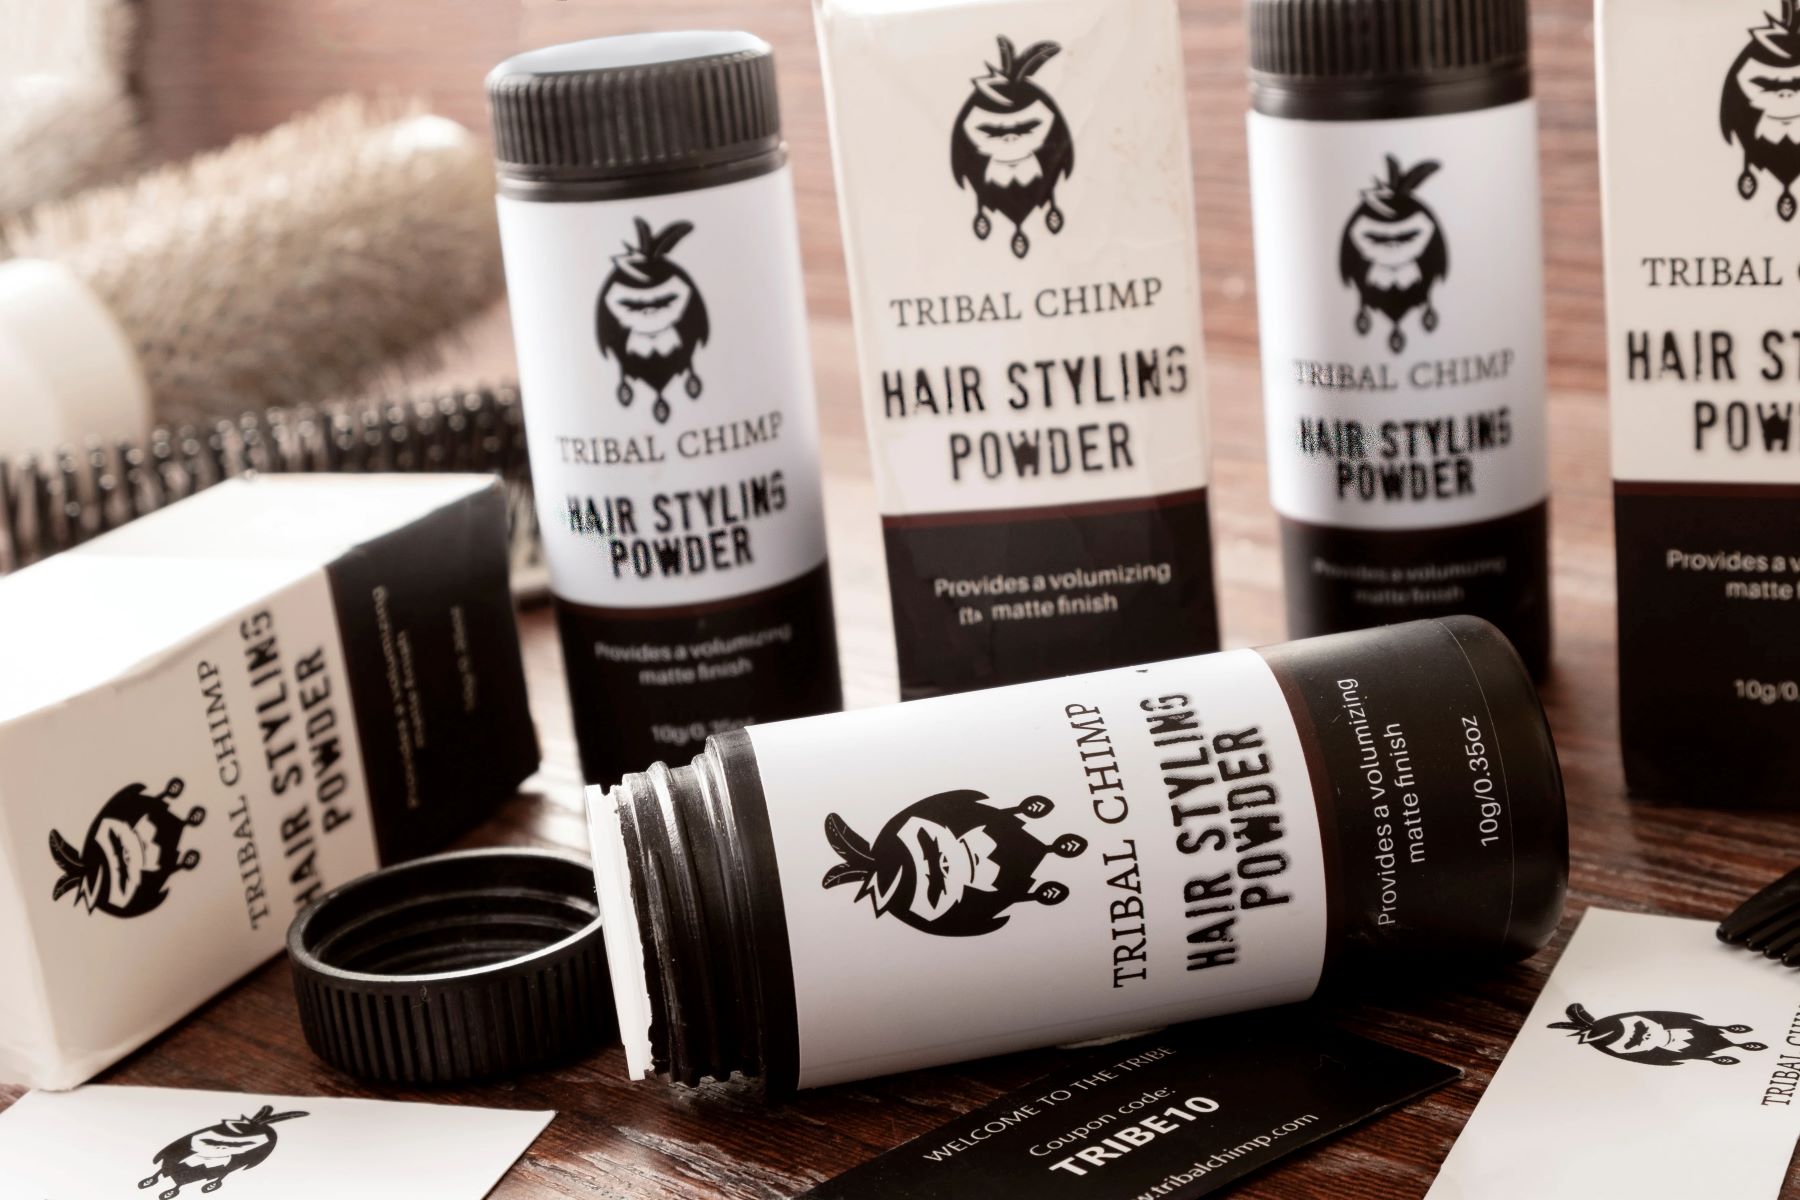 Surprising Dangers Of Inhaling Tribal Chimp Hair Styling Powder Revealed!